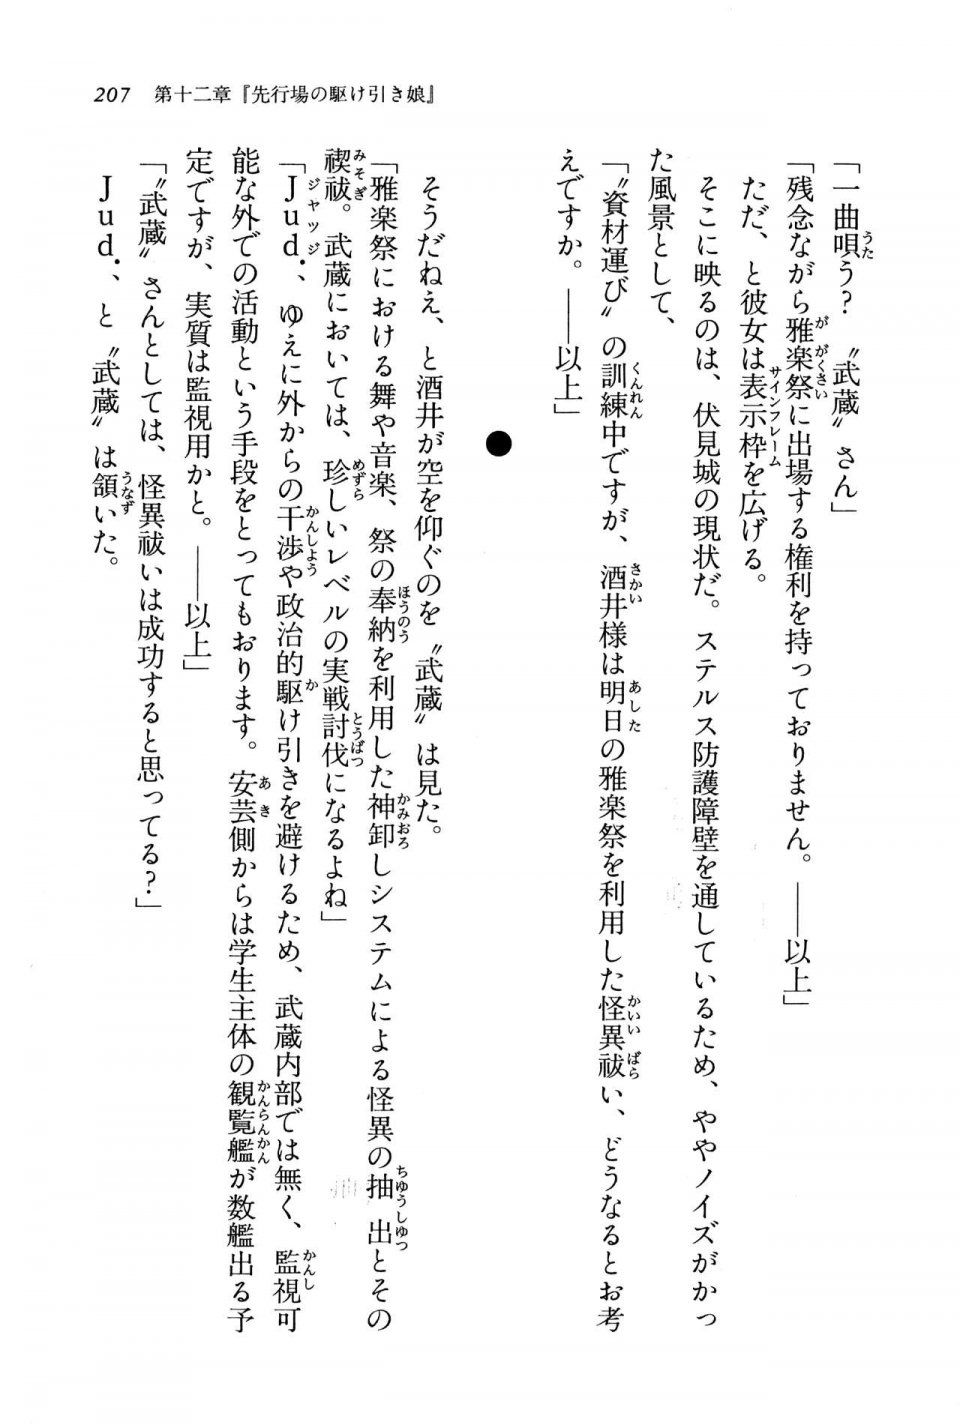 Kyoukai Senjou no Horizon BD Special Mininovel Vol 8(4B) - Photo #211